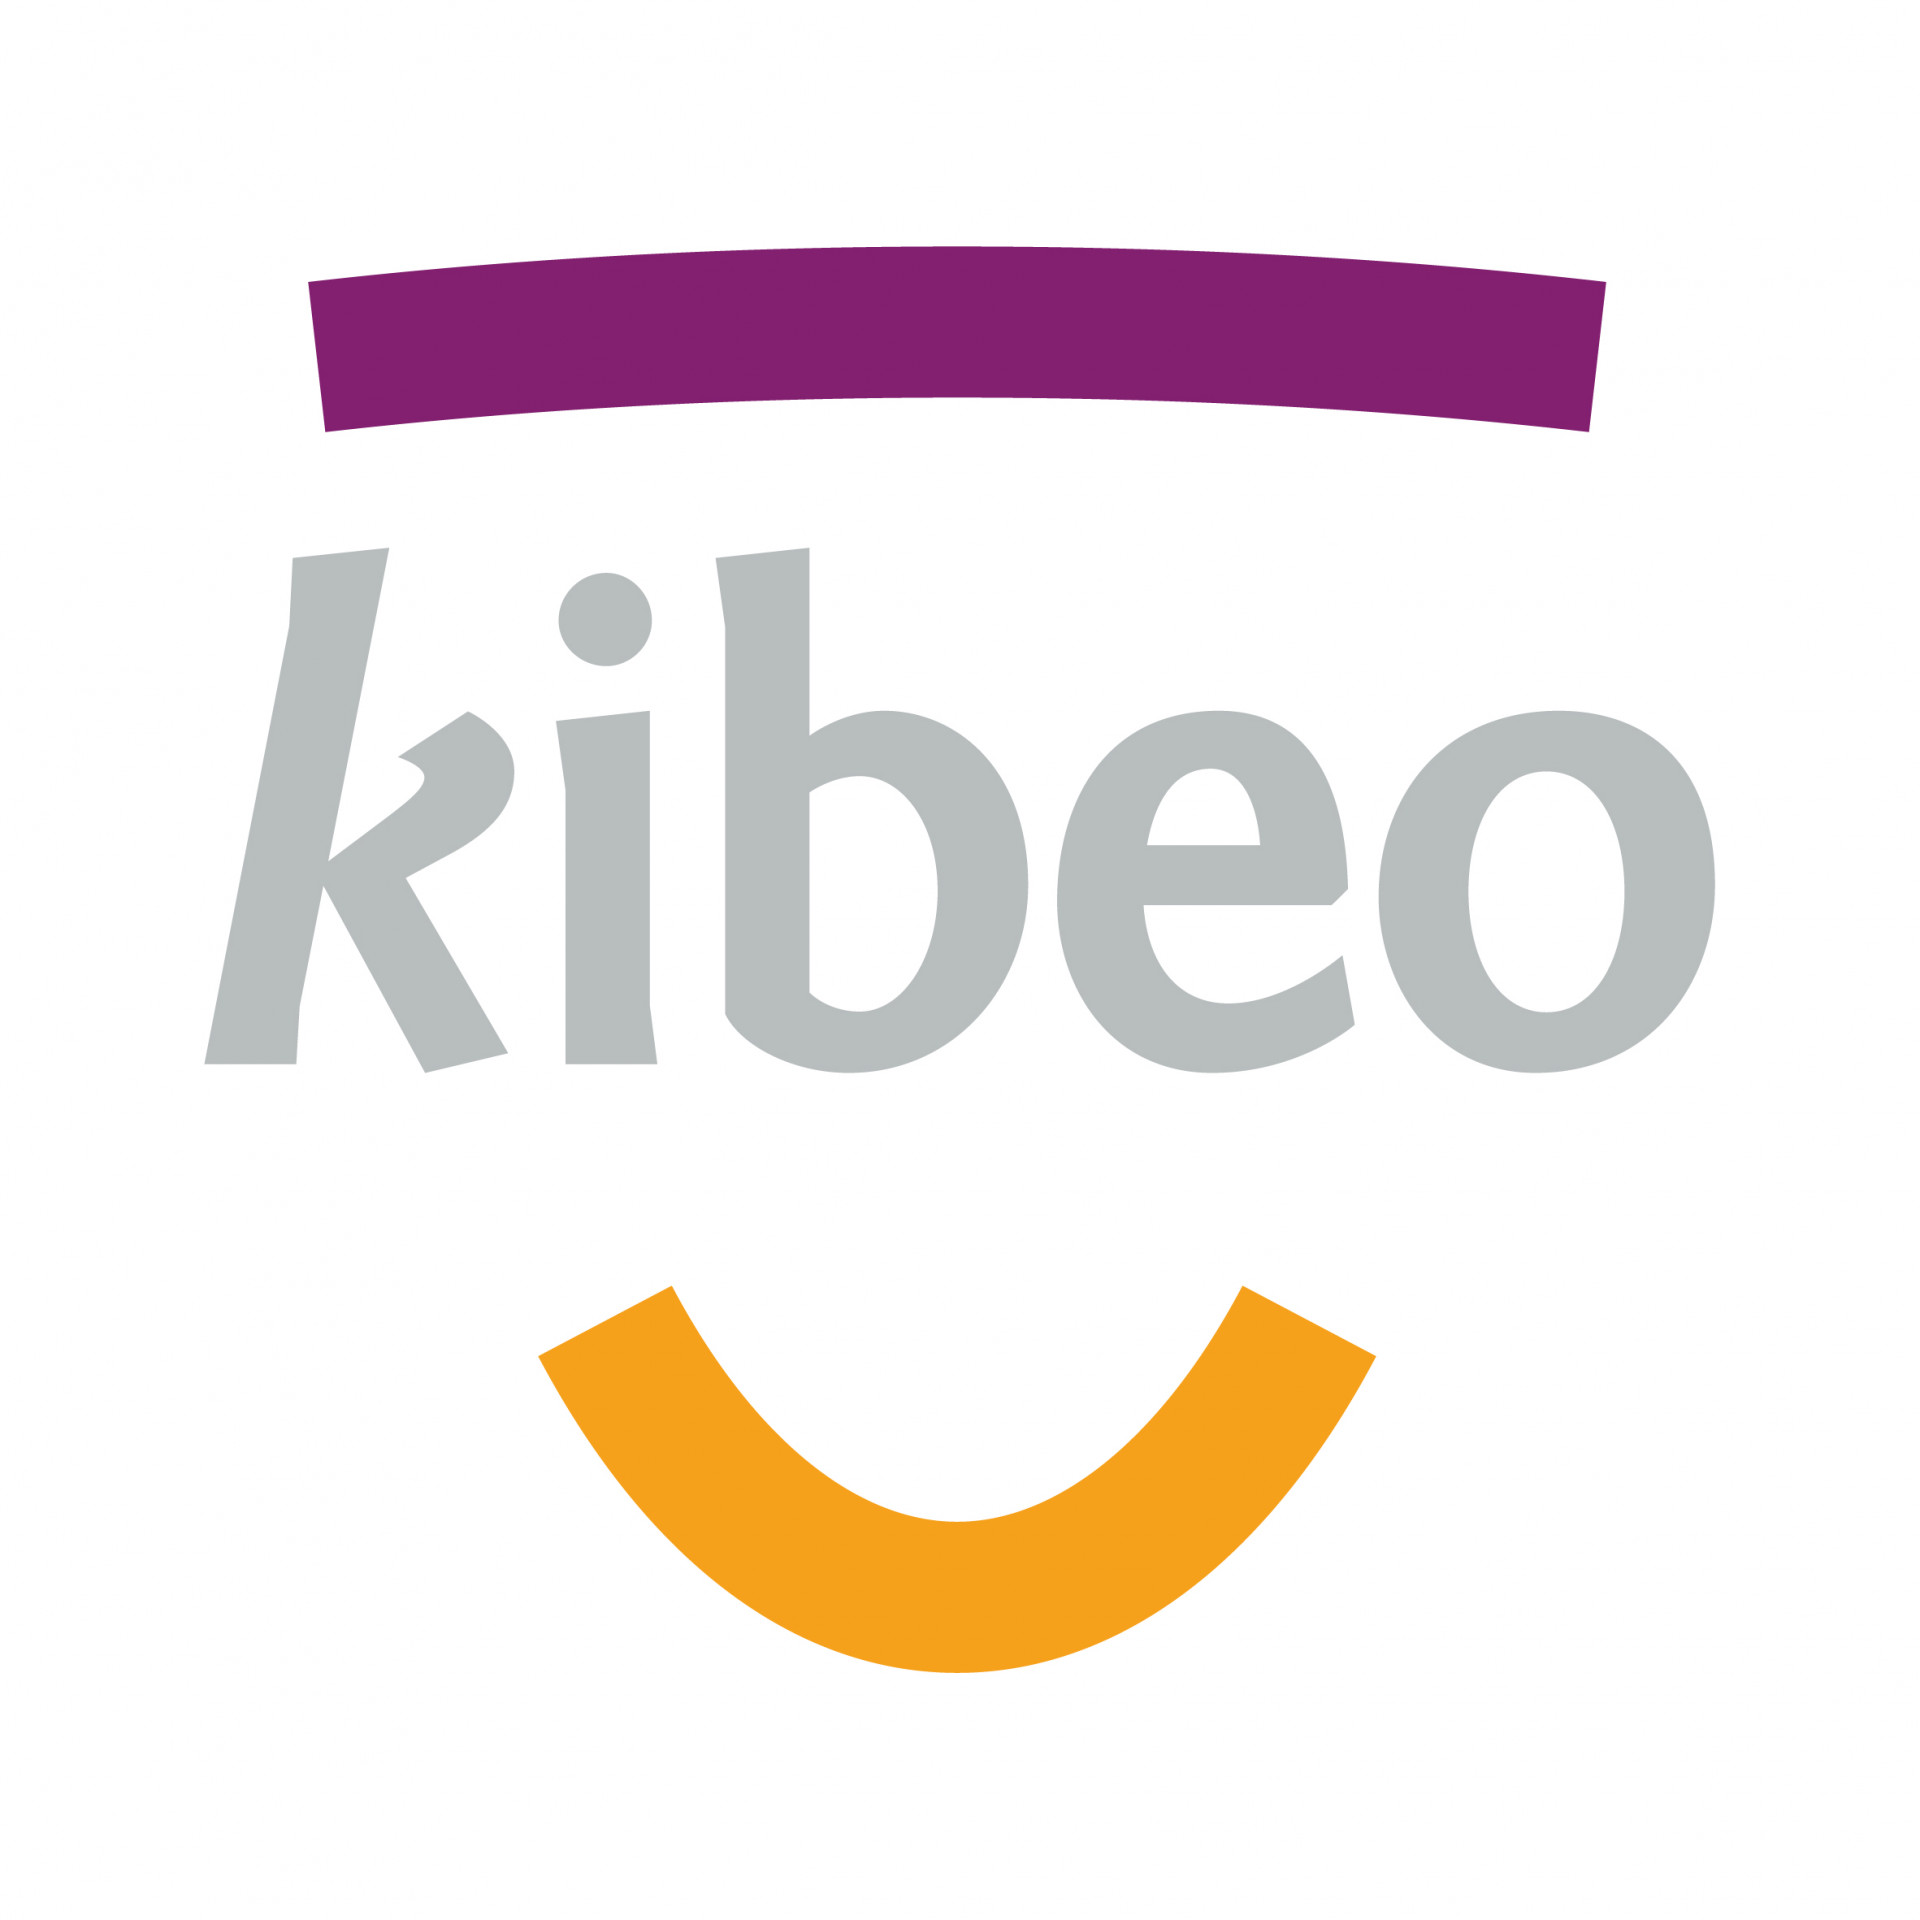 Logo Kibeo - op witte achtergrond (digitaal)